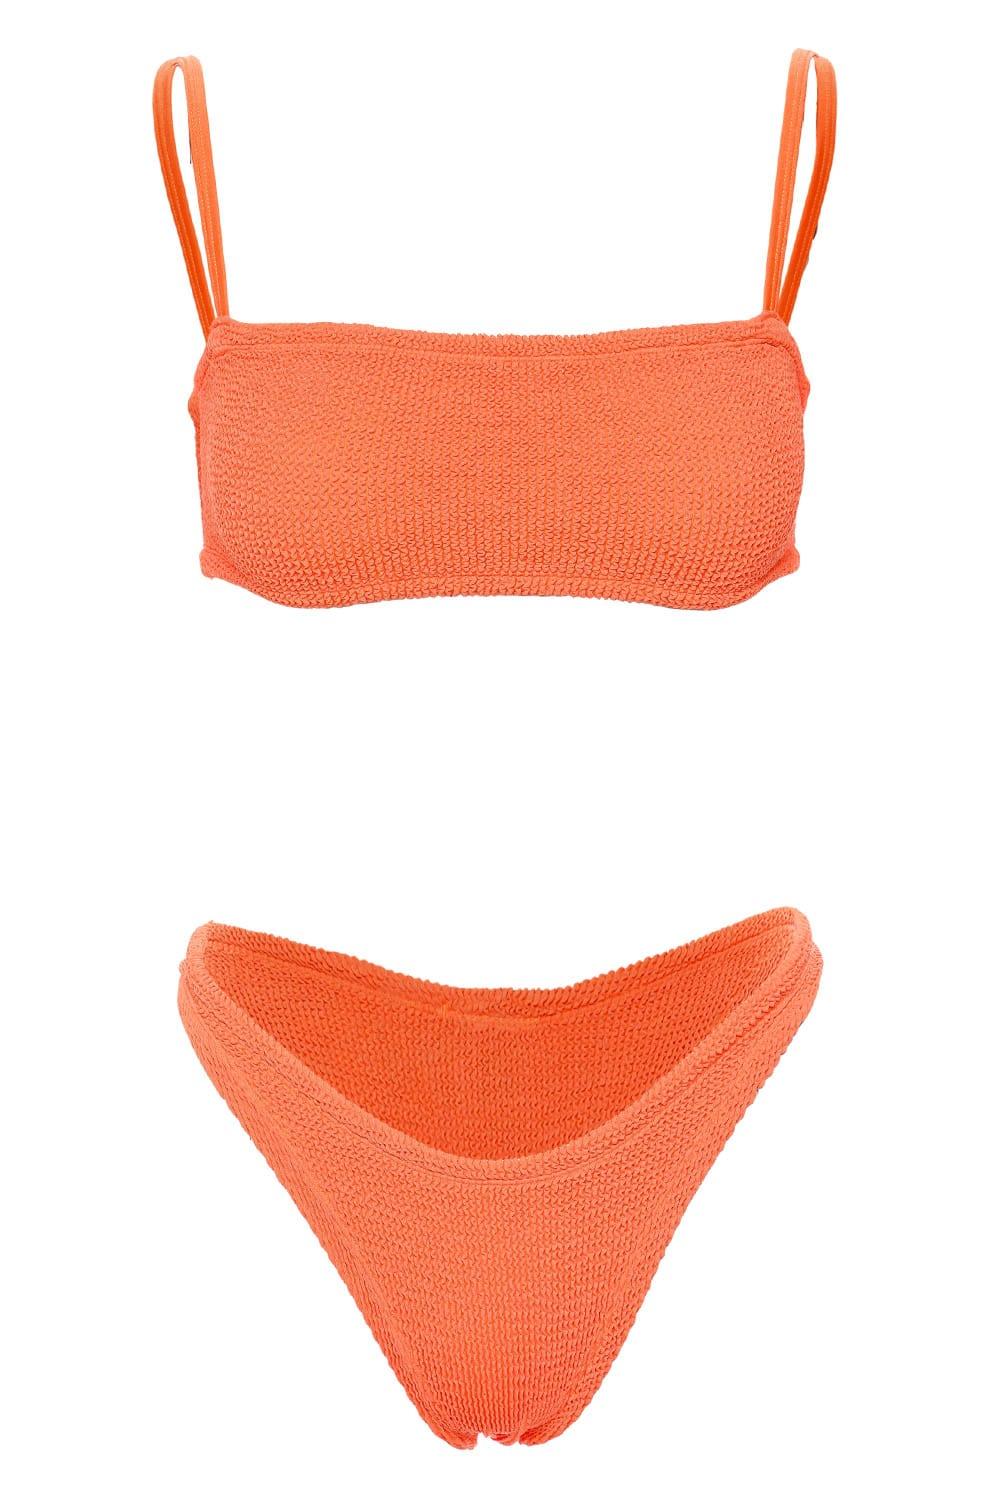 Hunza G Gigi Crinkle Bikini Set in Orange | Lyst UK